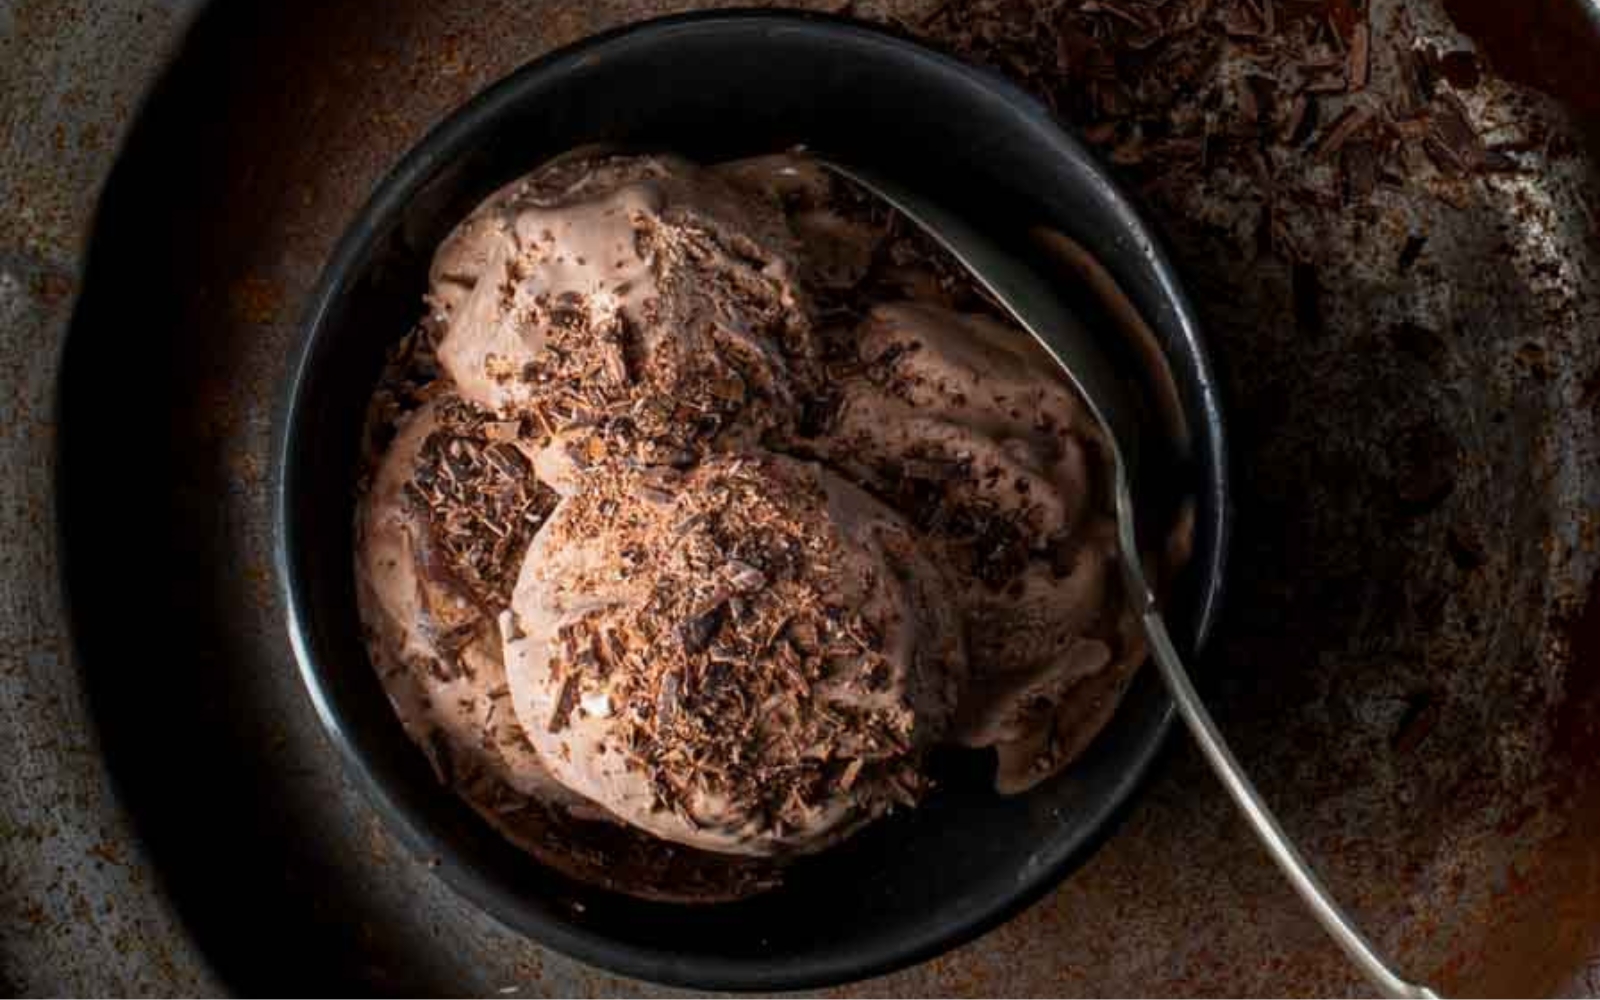 small bowl of chocolate ice cream with chocolate shavings